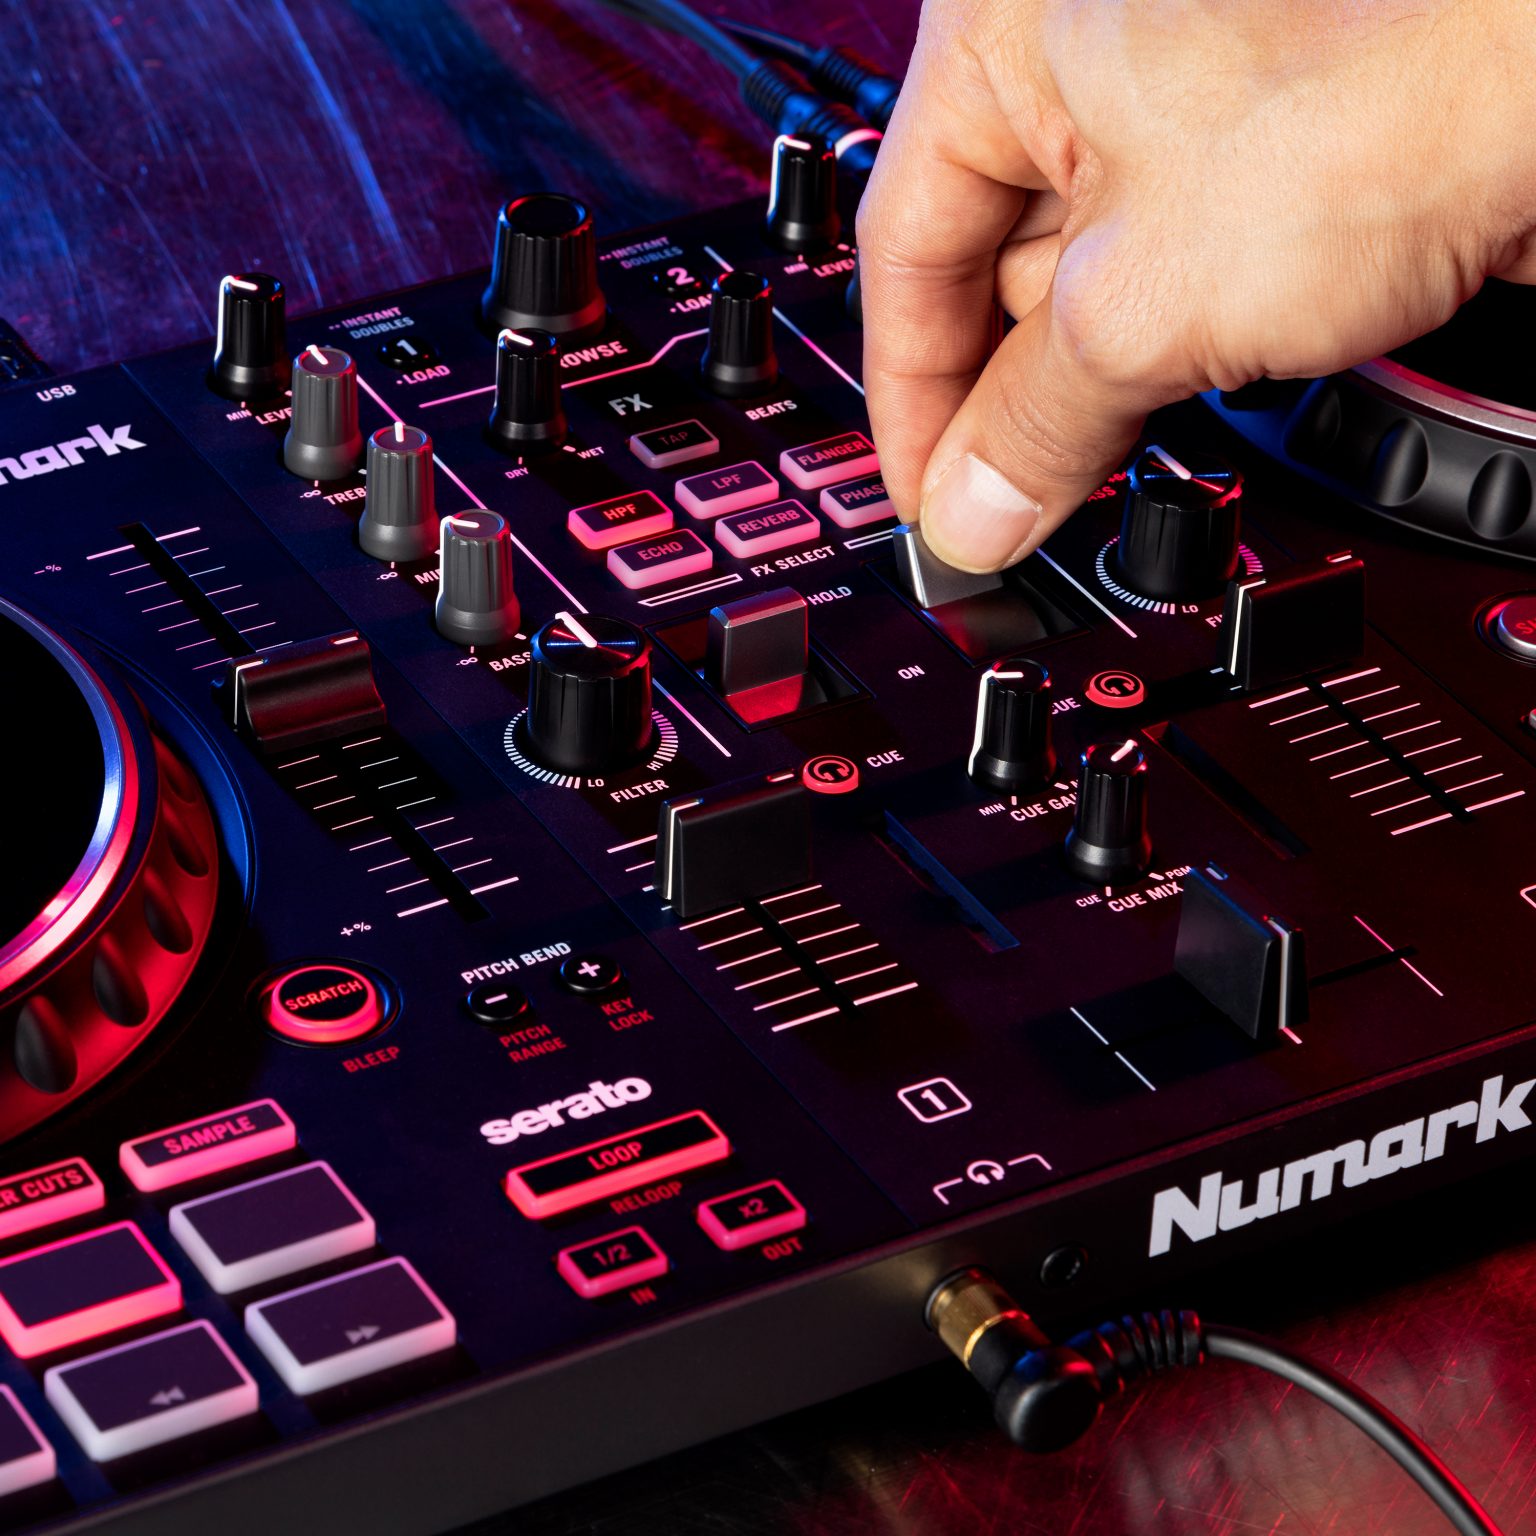 Bàn DJ Numark Mixtrack Pro FX